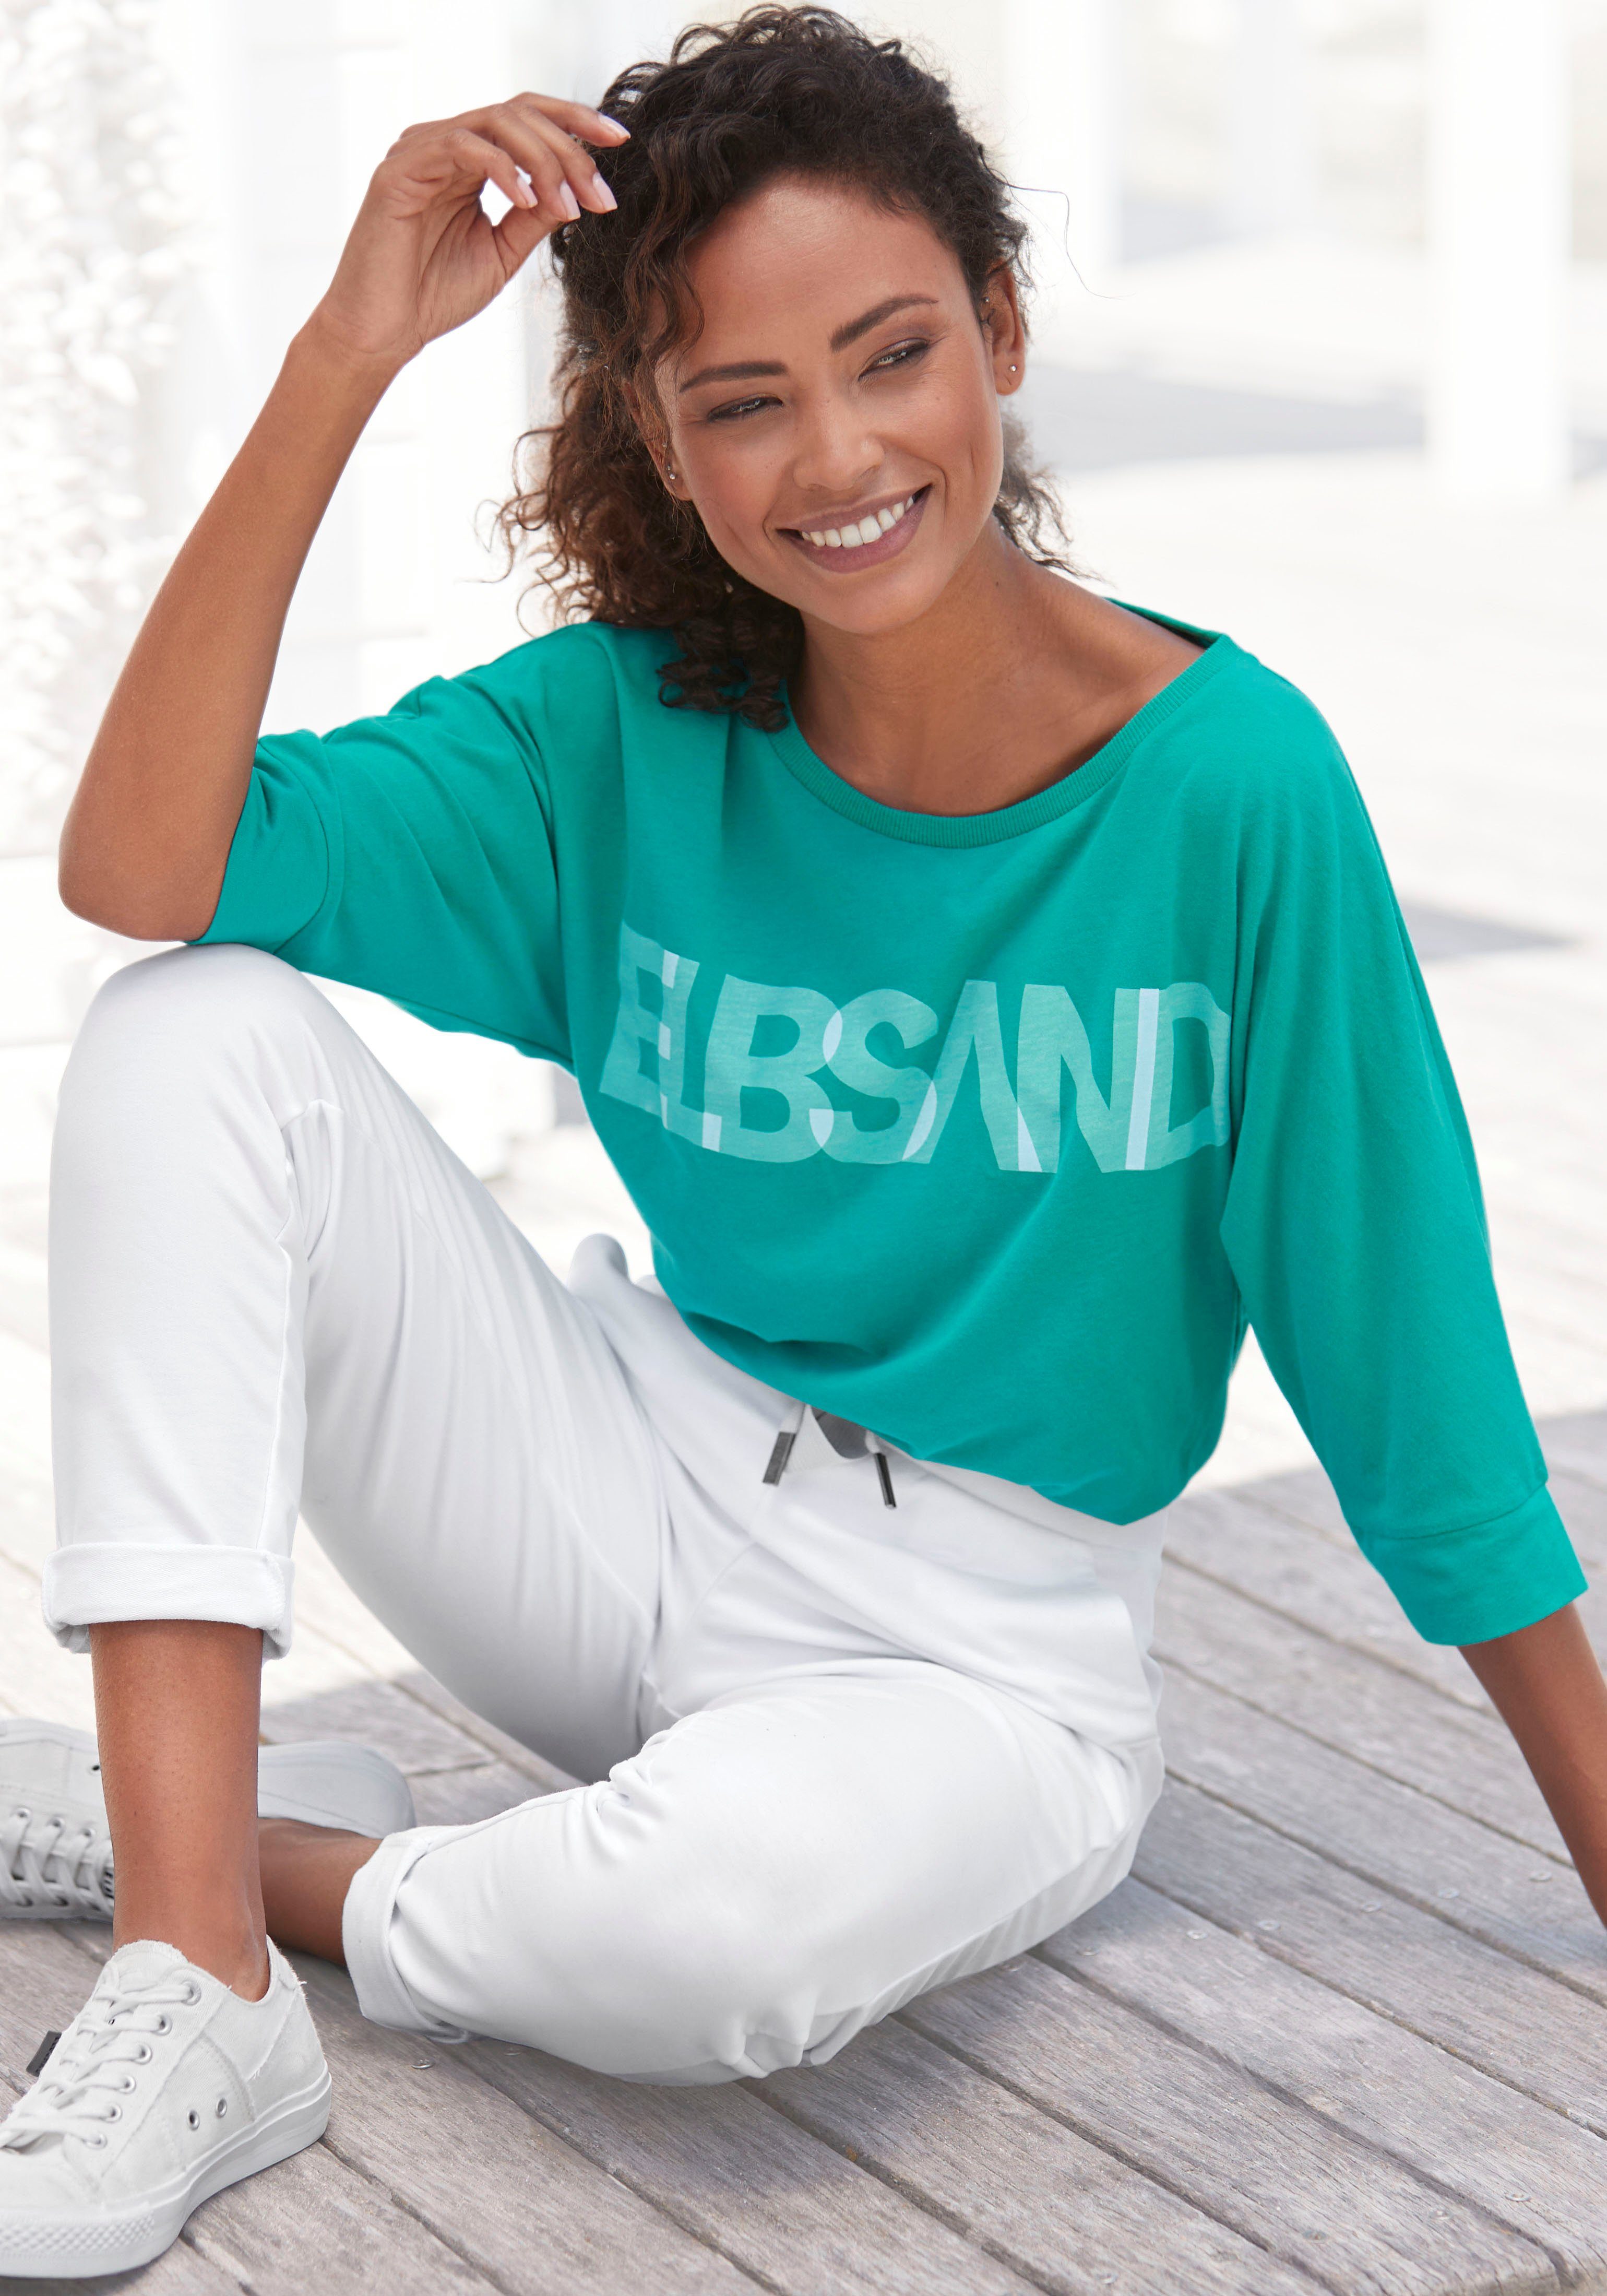 Elbsand 3/4-Arm-Shirt mit Logodruck, Baumwoll-Mix, teal Passform lockere seaweed